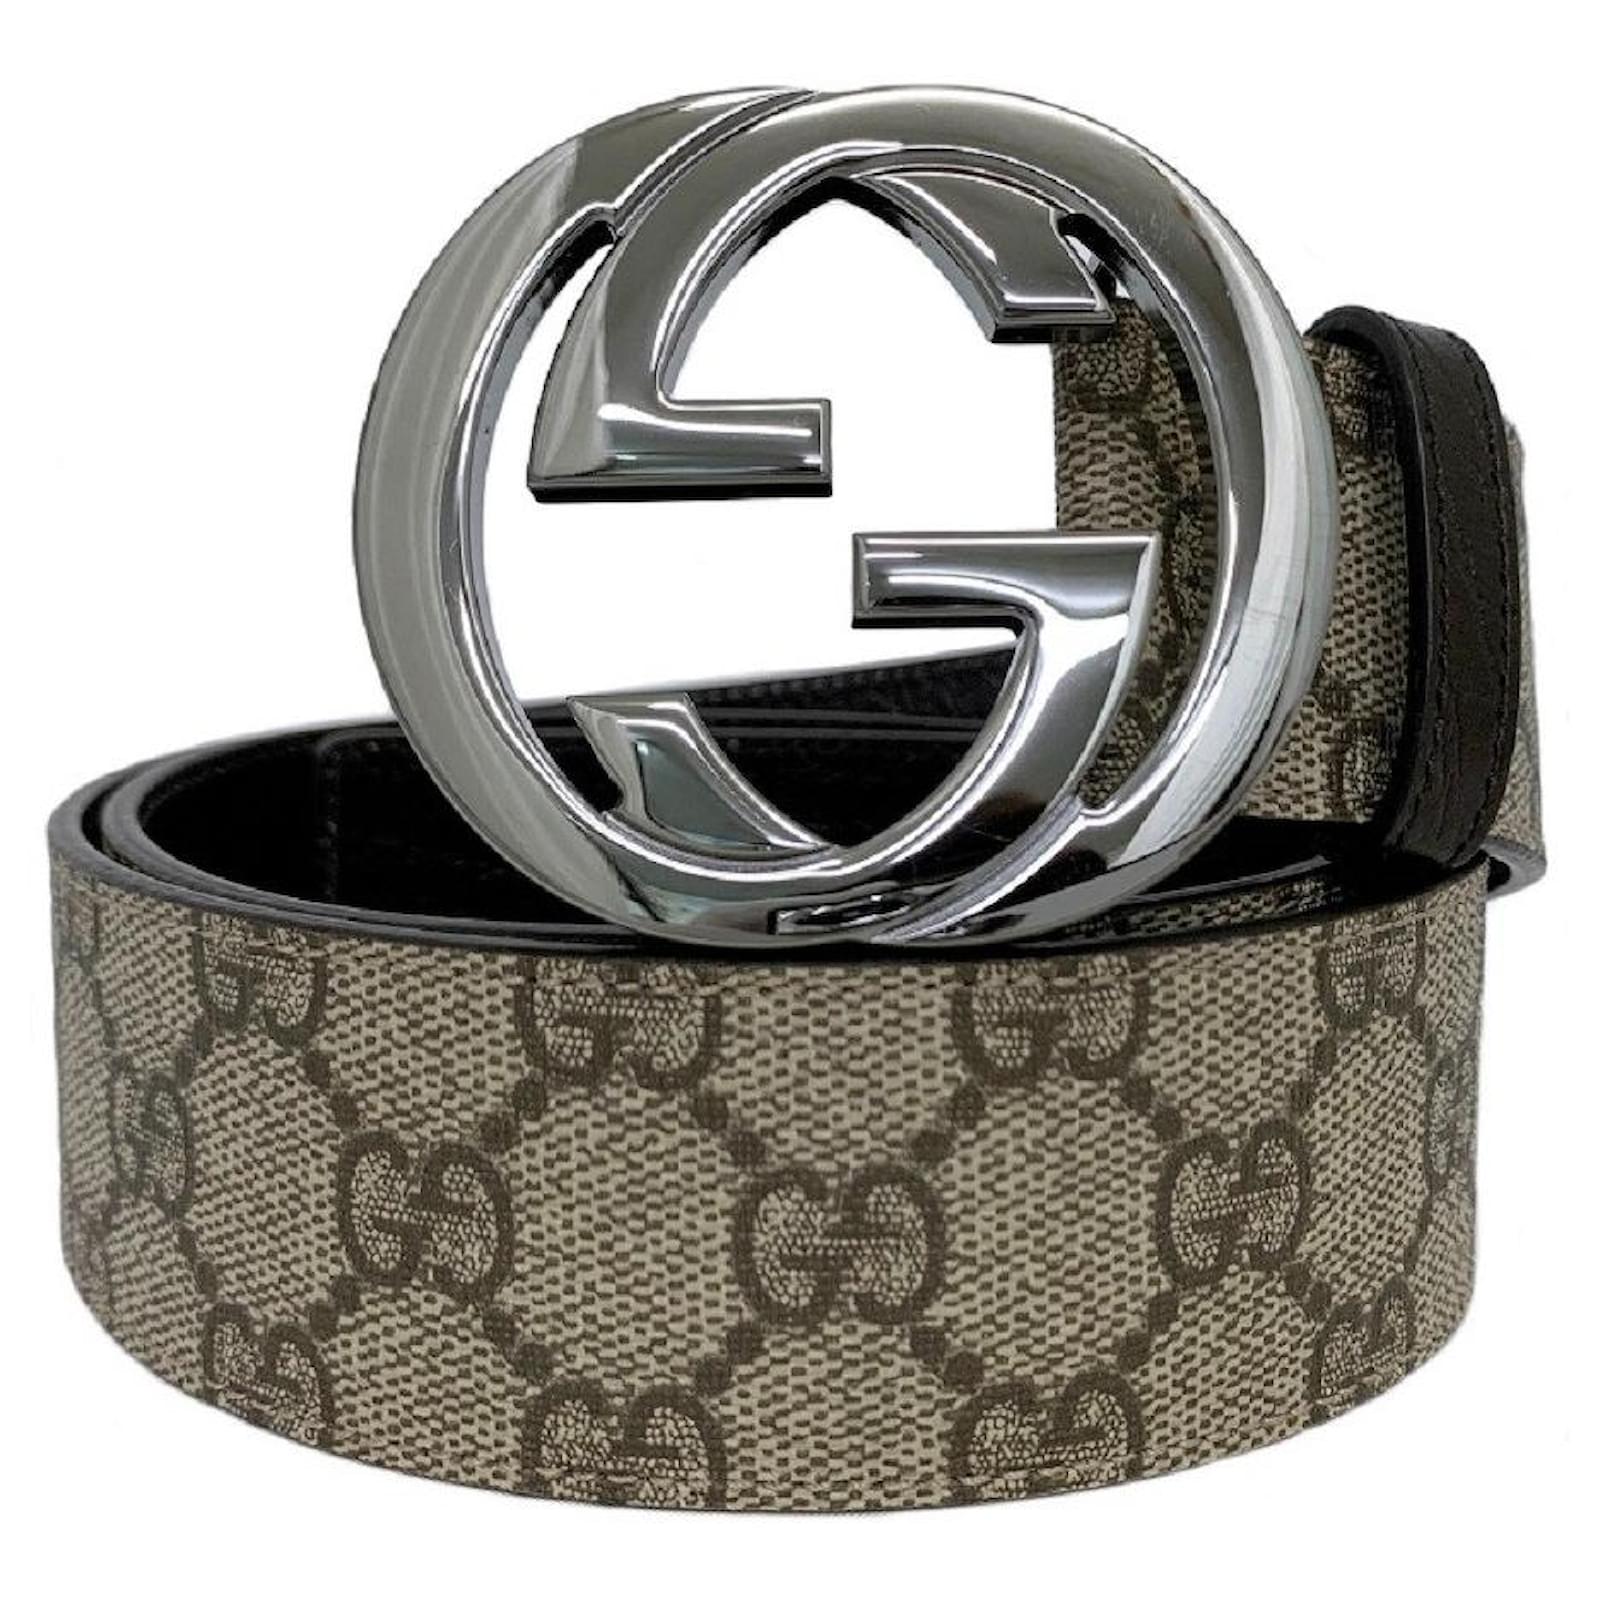 Free: Gucci Logo Italian fashion Symbol - gucci belt 